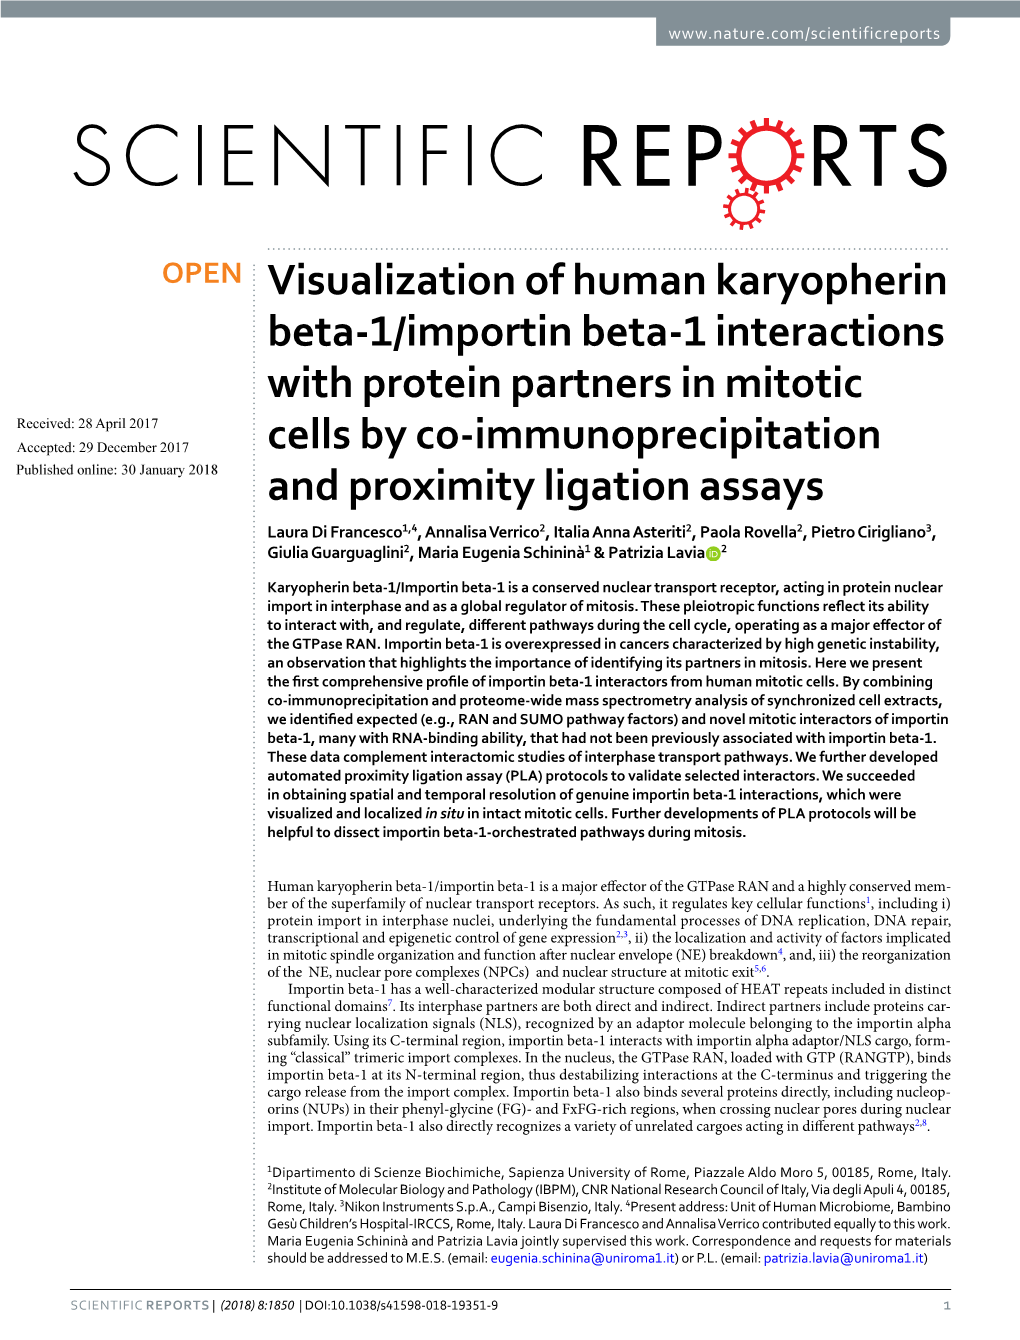 Visualization of Human Karyopherin Beta-1/Importin Beta-1 Interactions